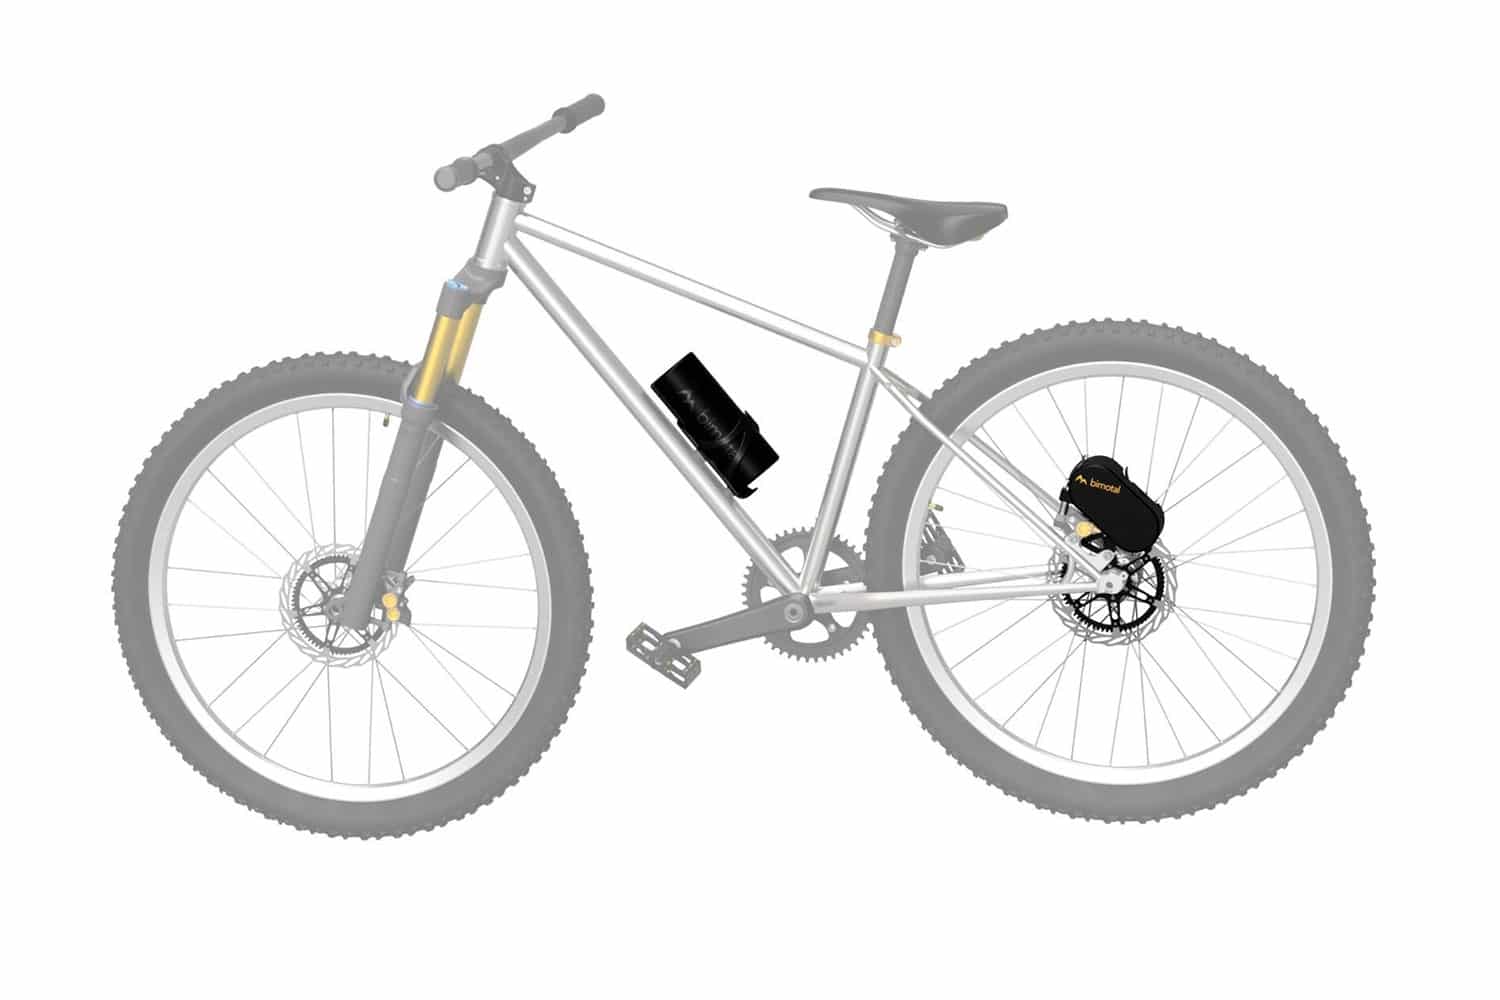 Brake-mounted Bimotal Elevate turns mountain bikes into electric bicycles